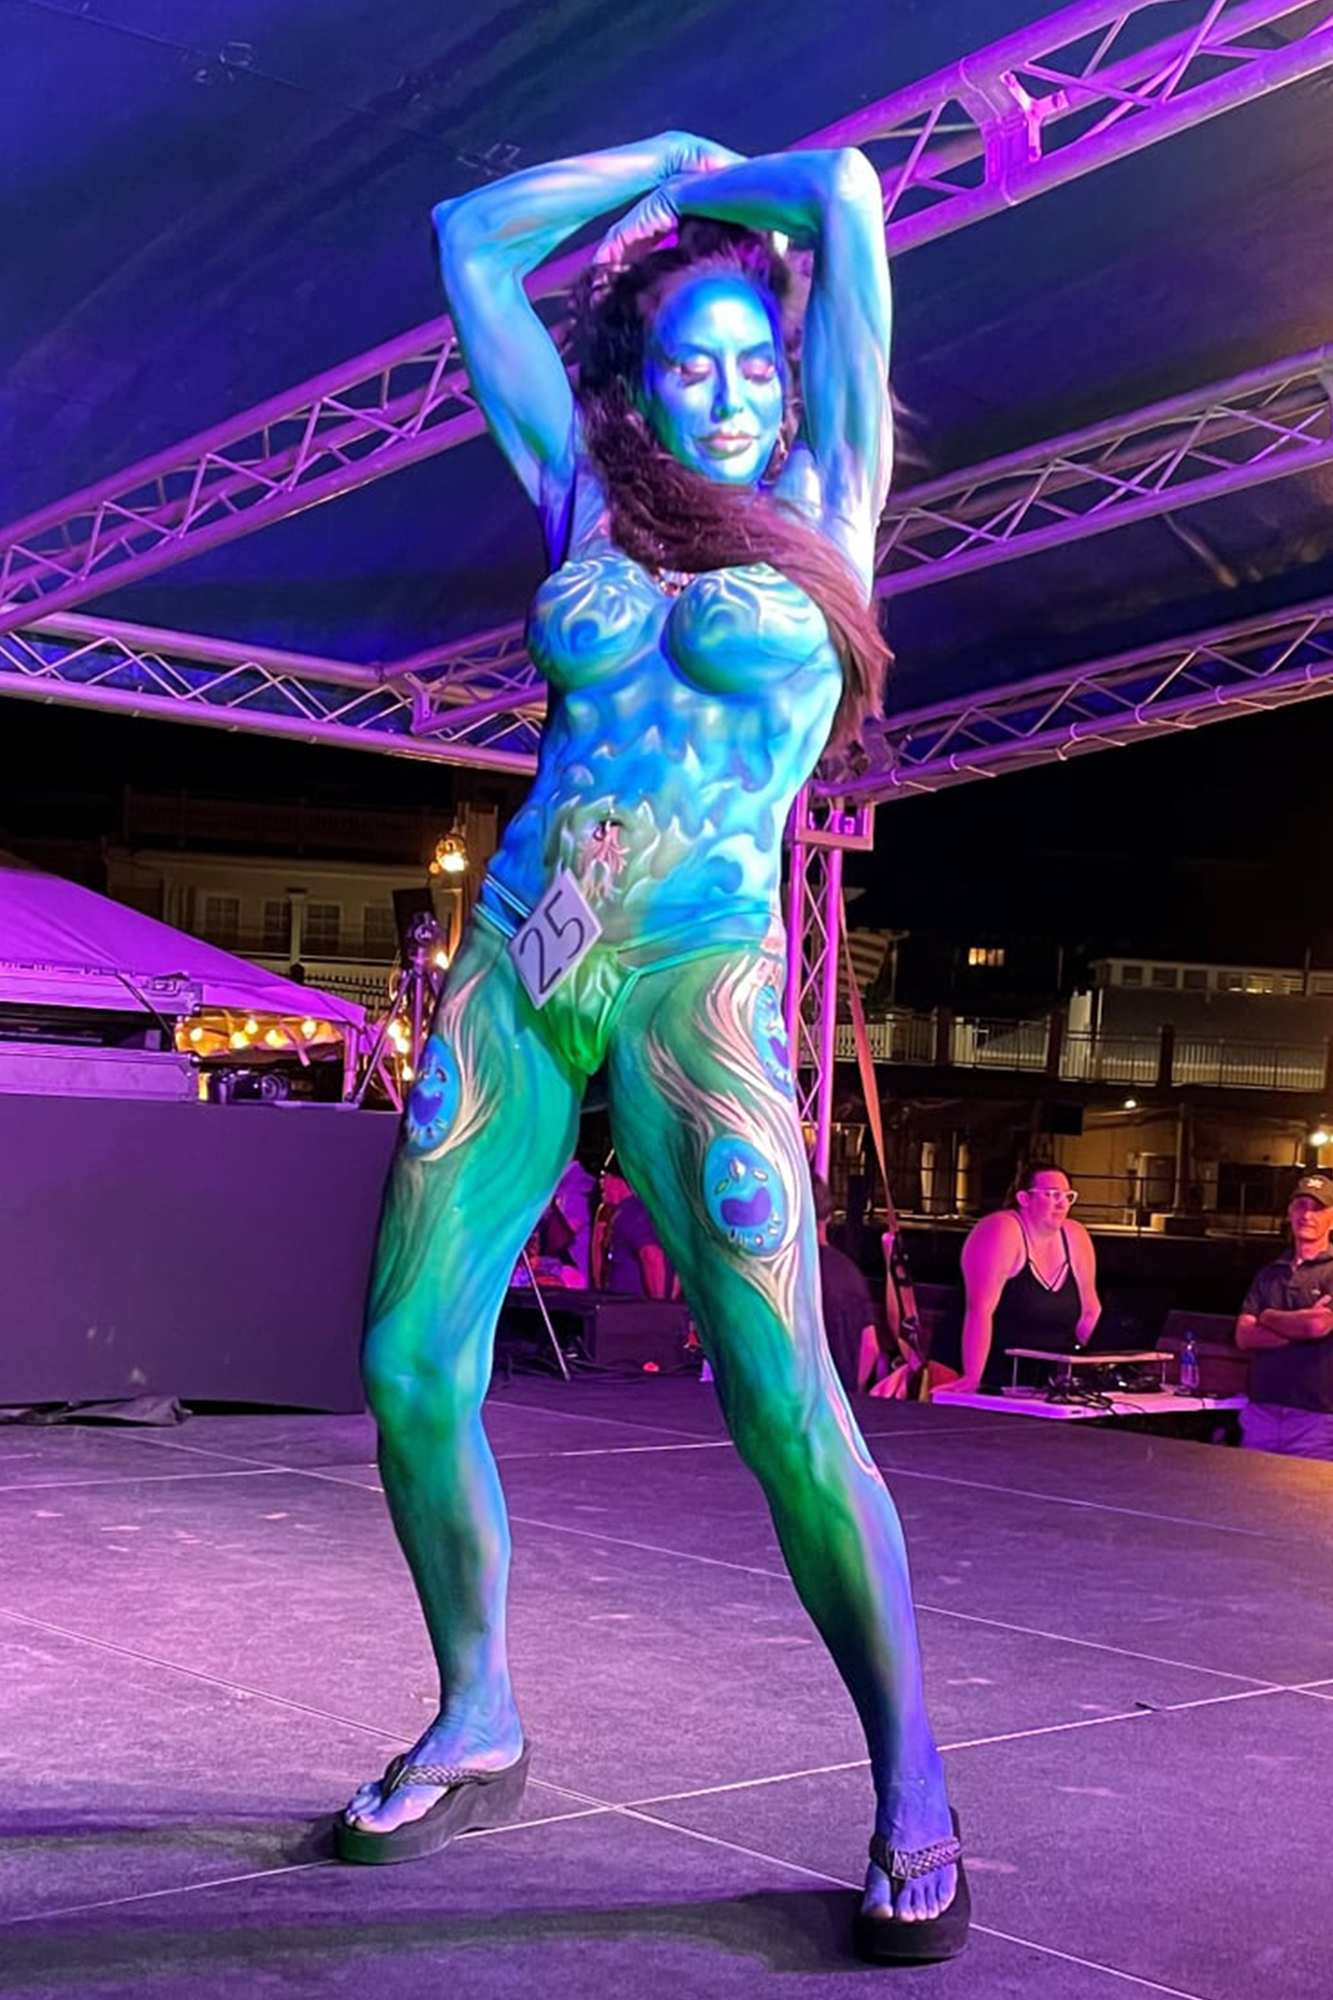 bridgette hitchcock share fantasy fest body painting photos photos